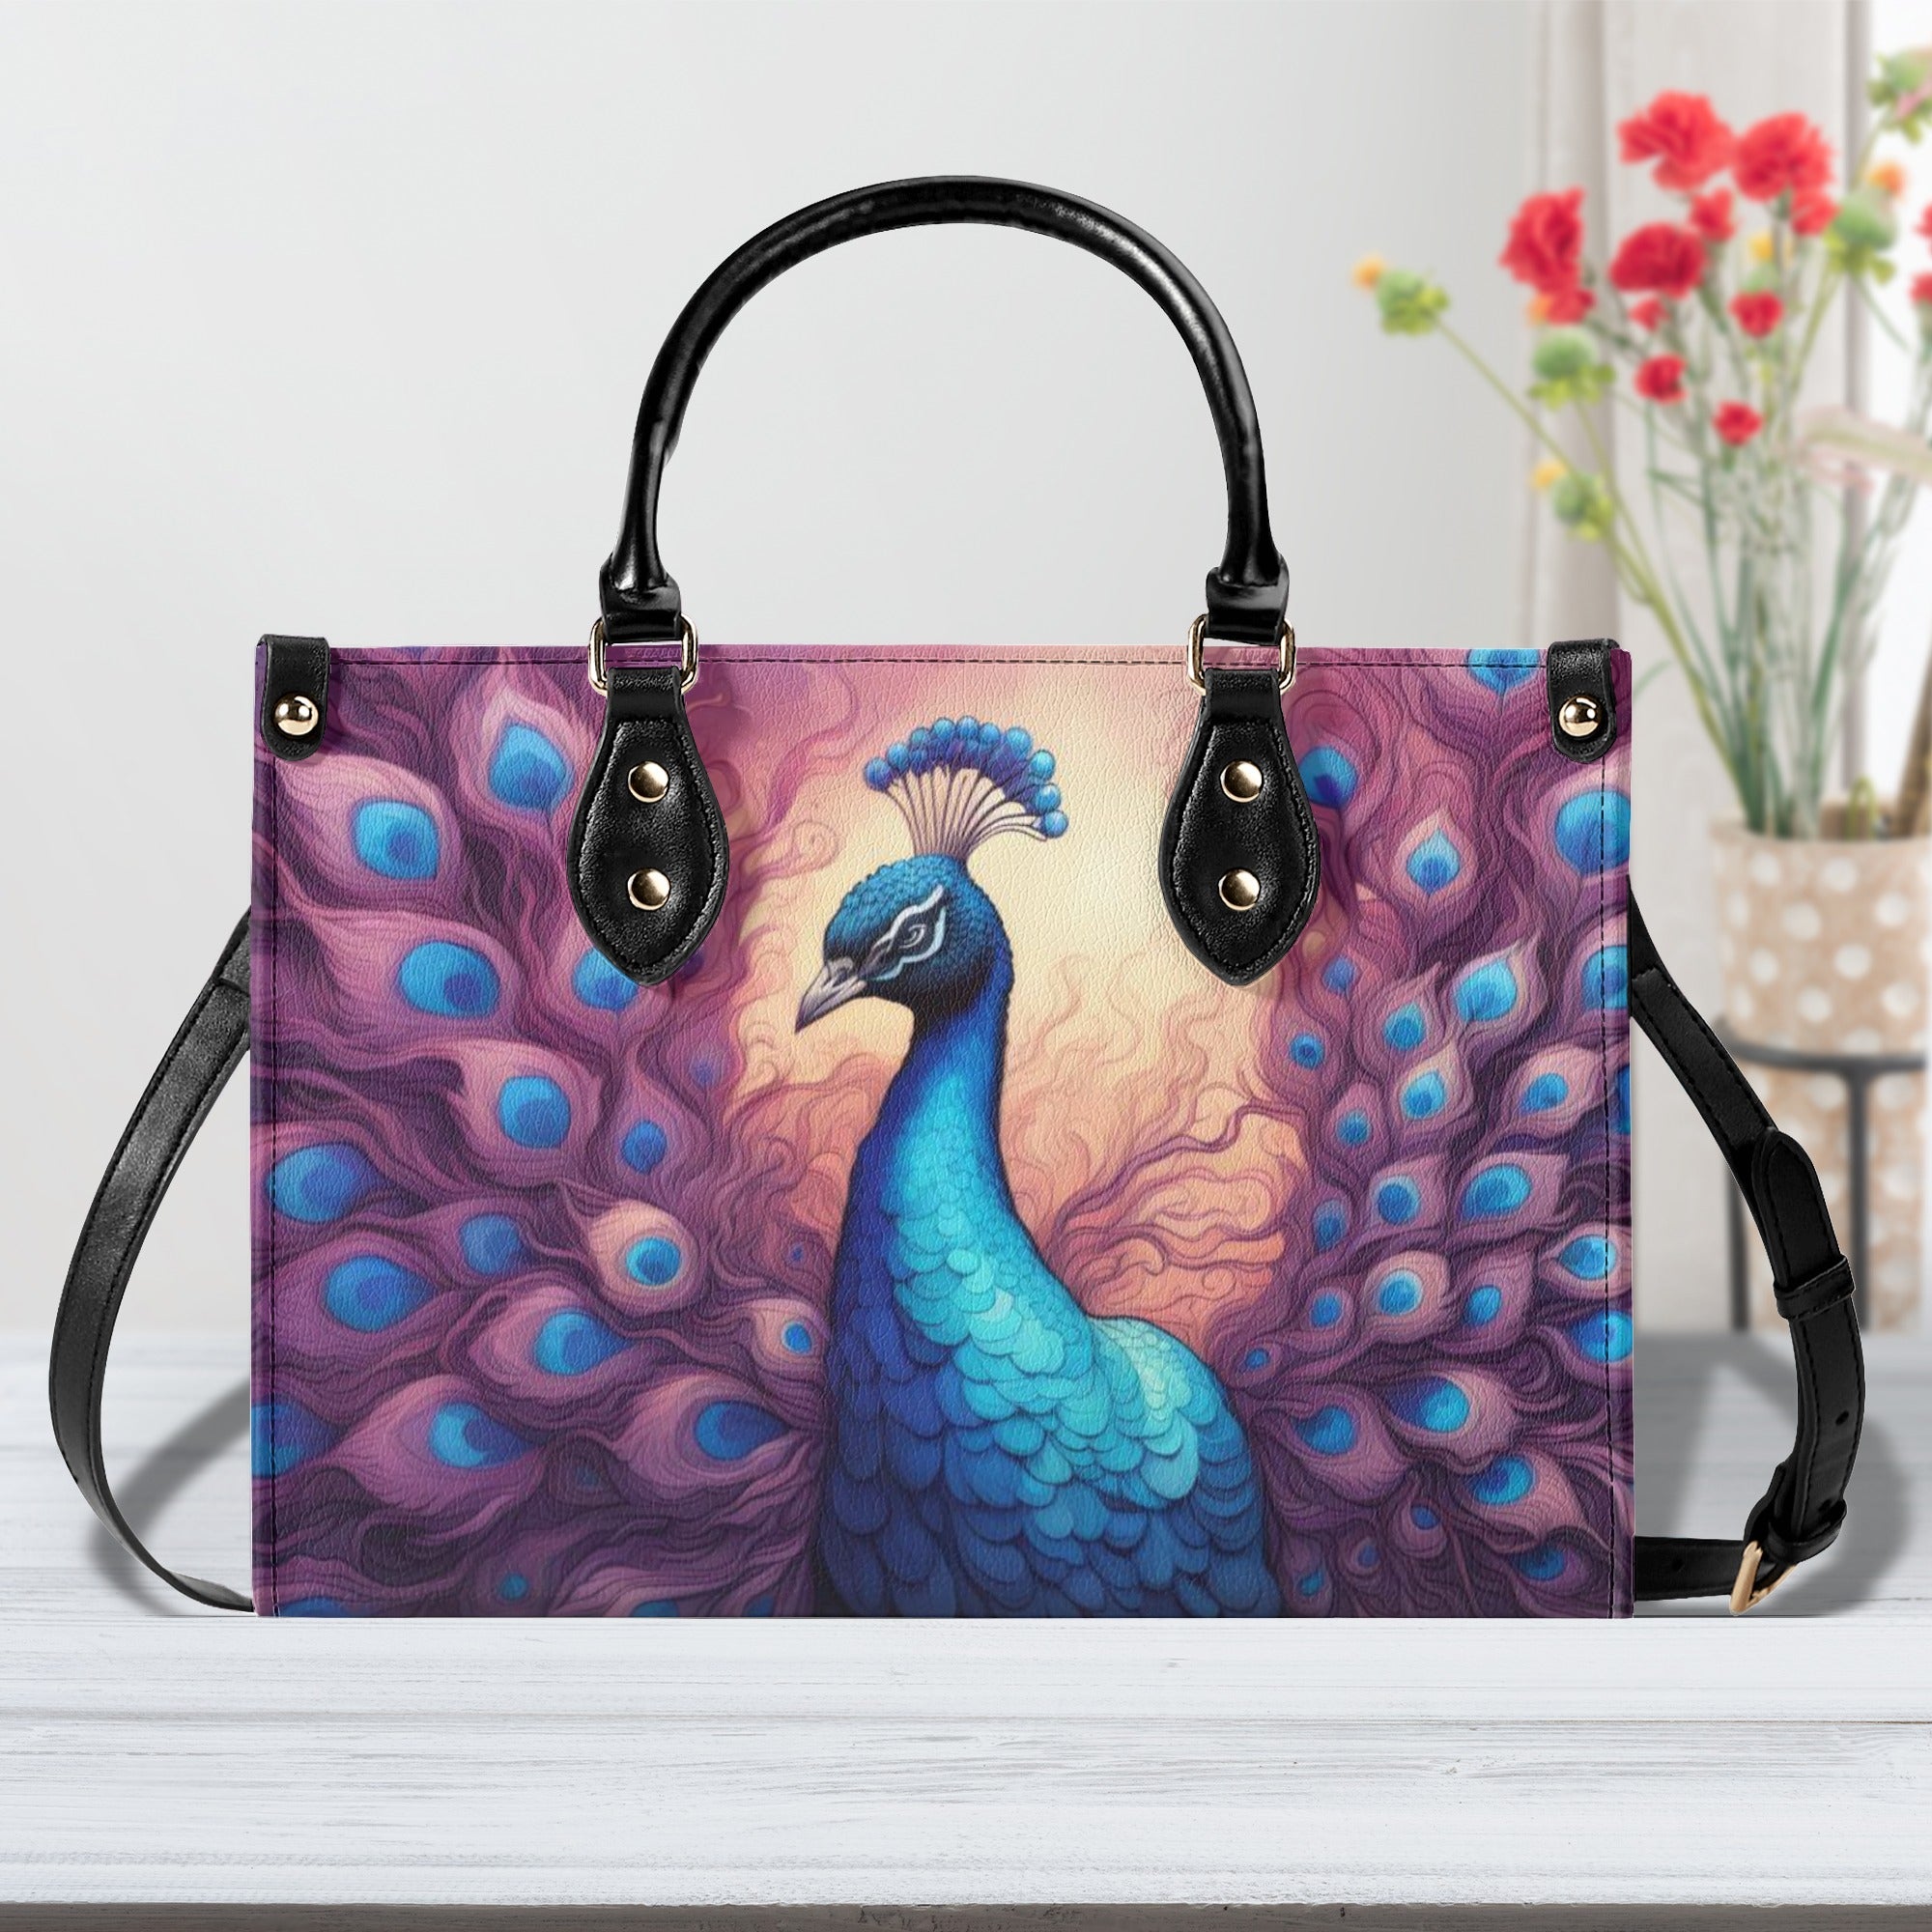 Buy Decdeal Women Shoulder Bag Peacock Embroidered Shiny Sequins Canvas Tote  Bag Handbag Adjustable Straps Crossbody Bag at Amazon.in